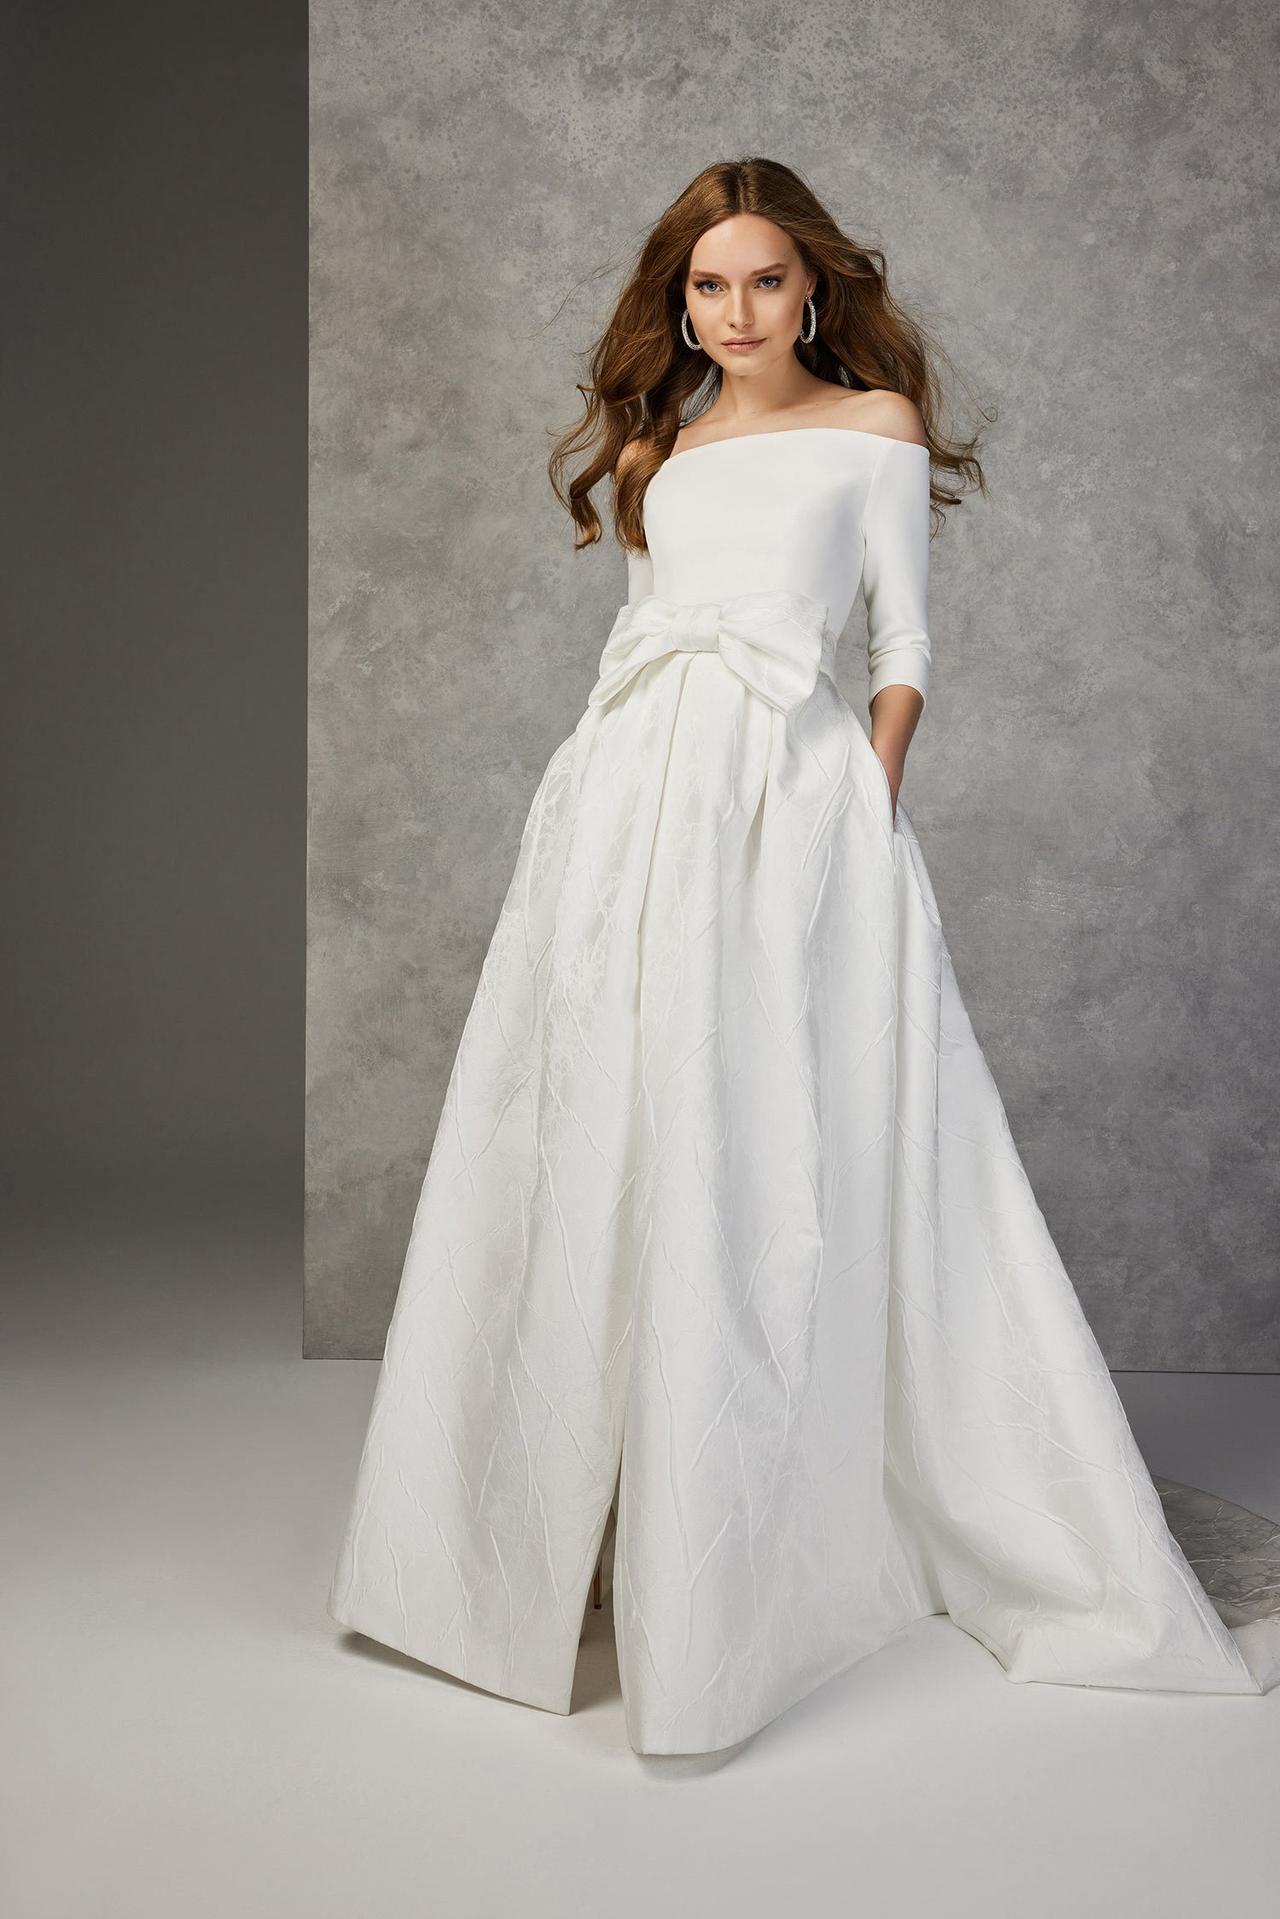 vestidos de novia sencillos y elegantes manga larga